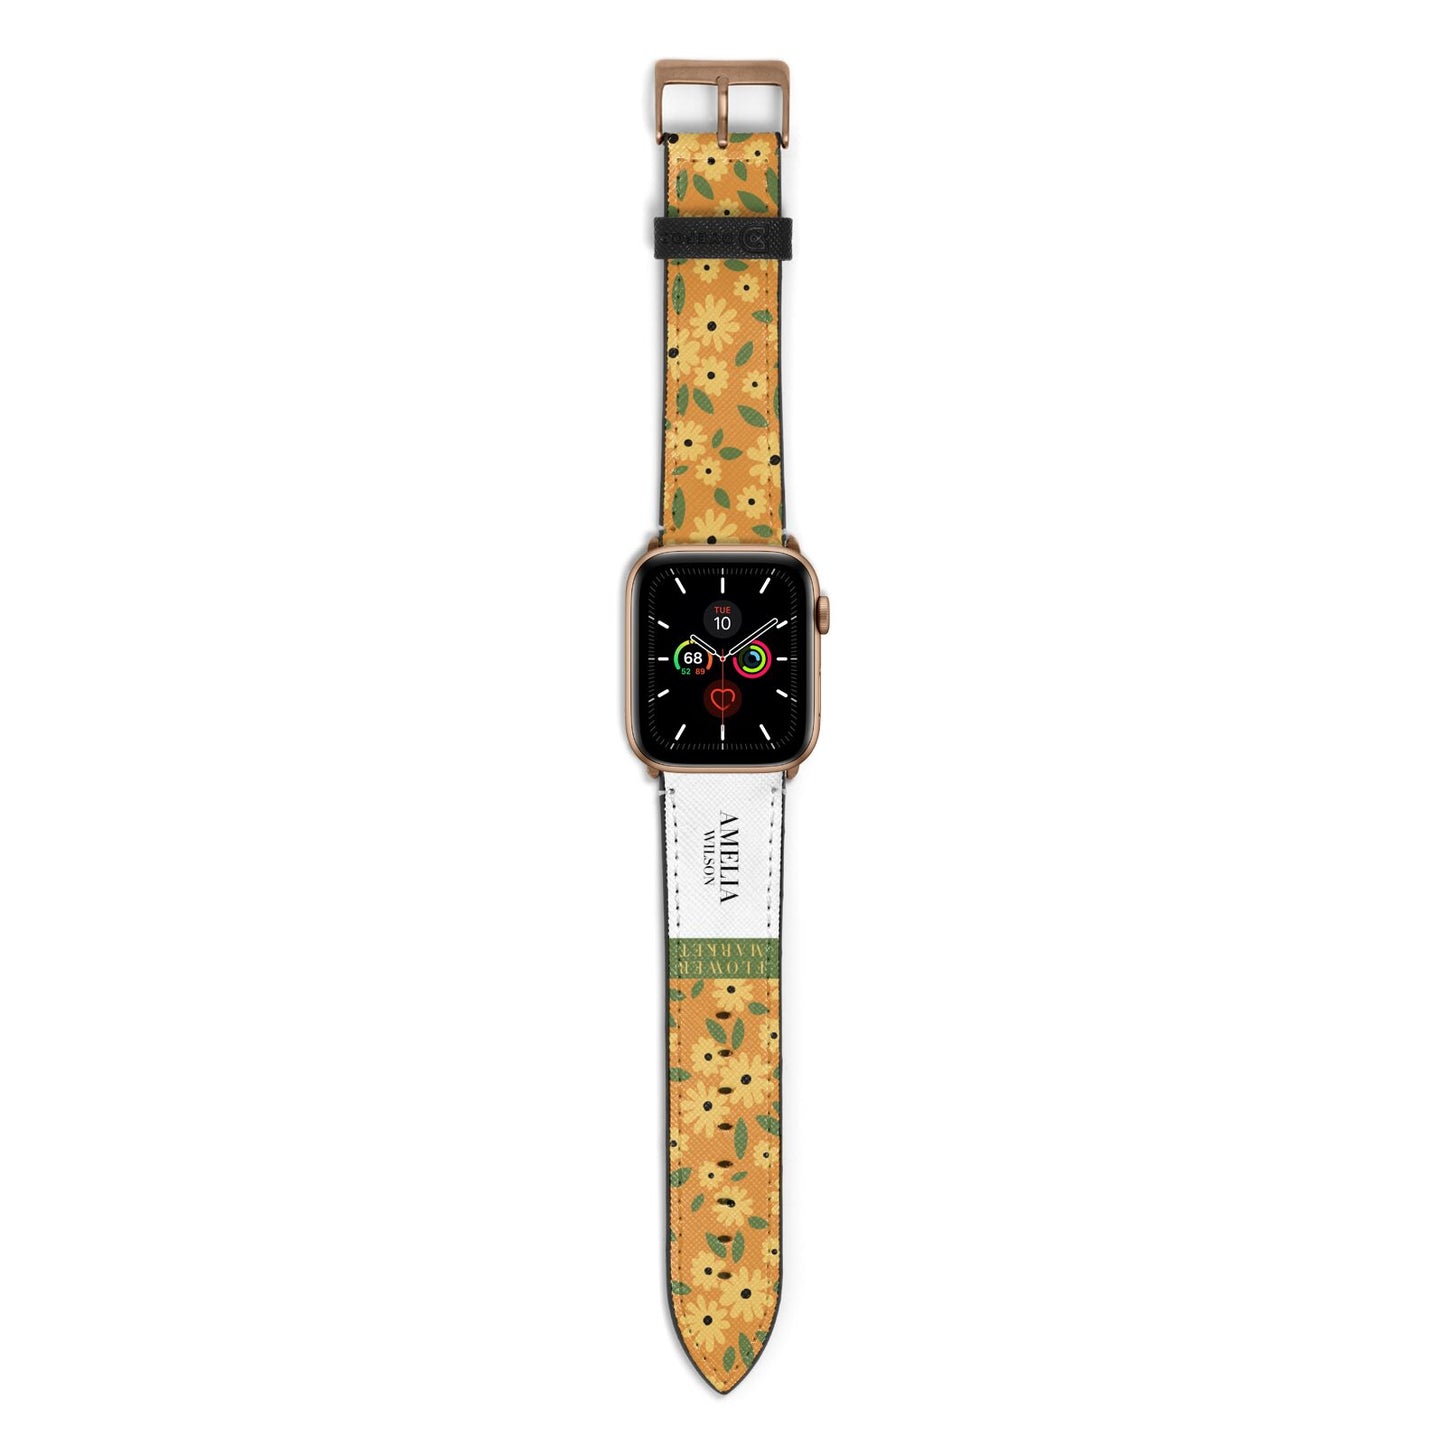 California Flower Market Apple Watch Strap with Gold Hardware